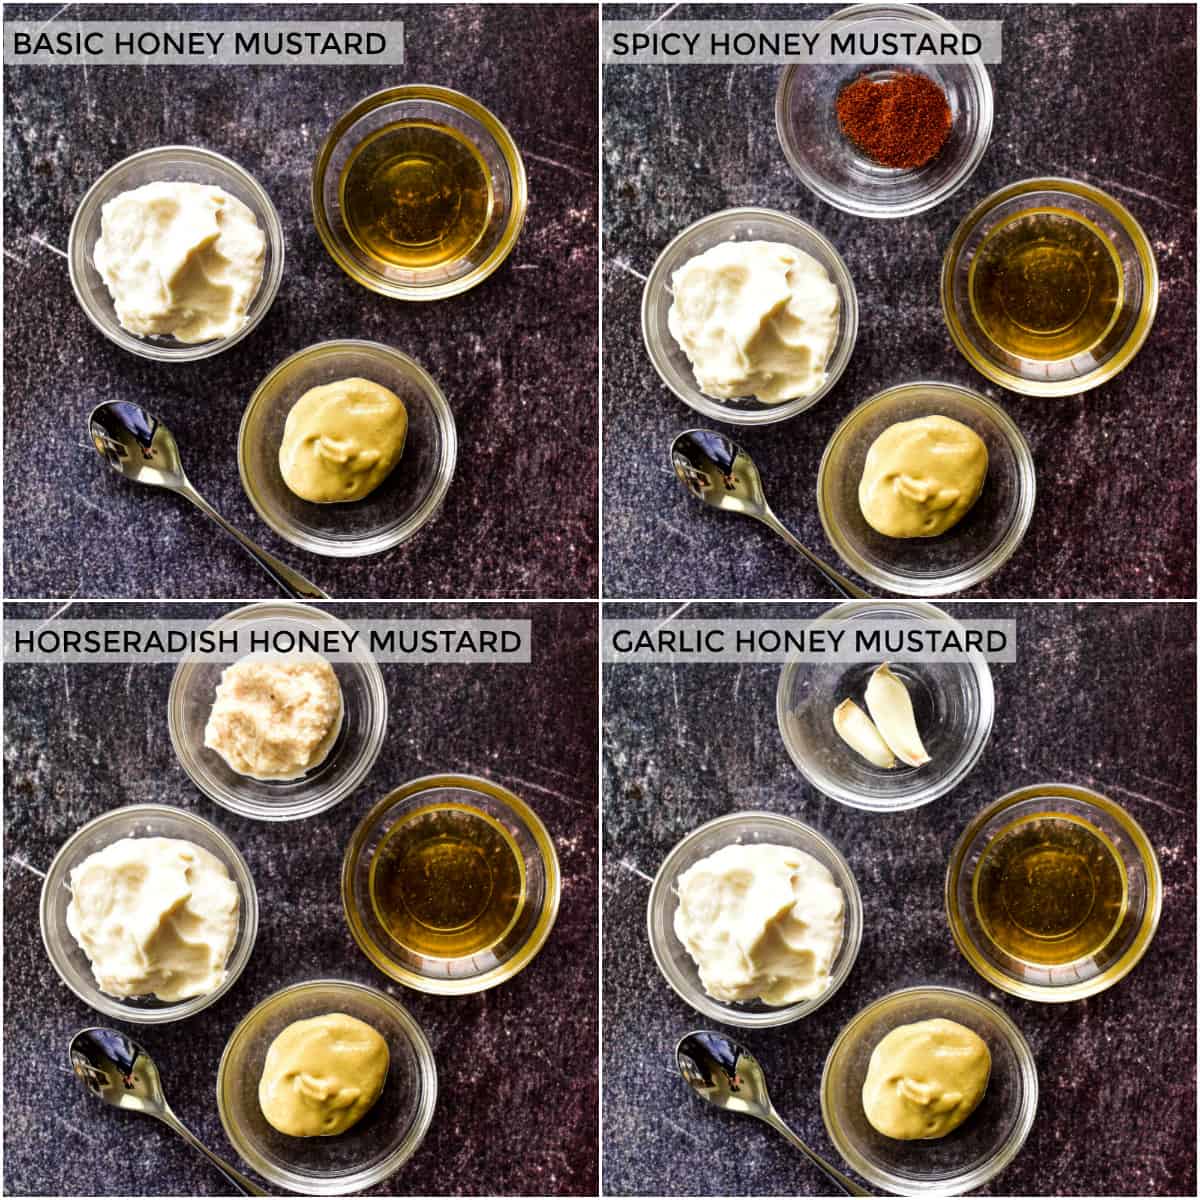 Ingredients for 4 types of Honey Mustard